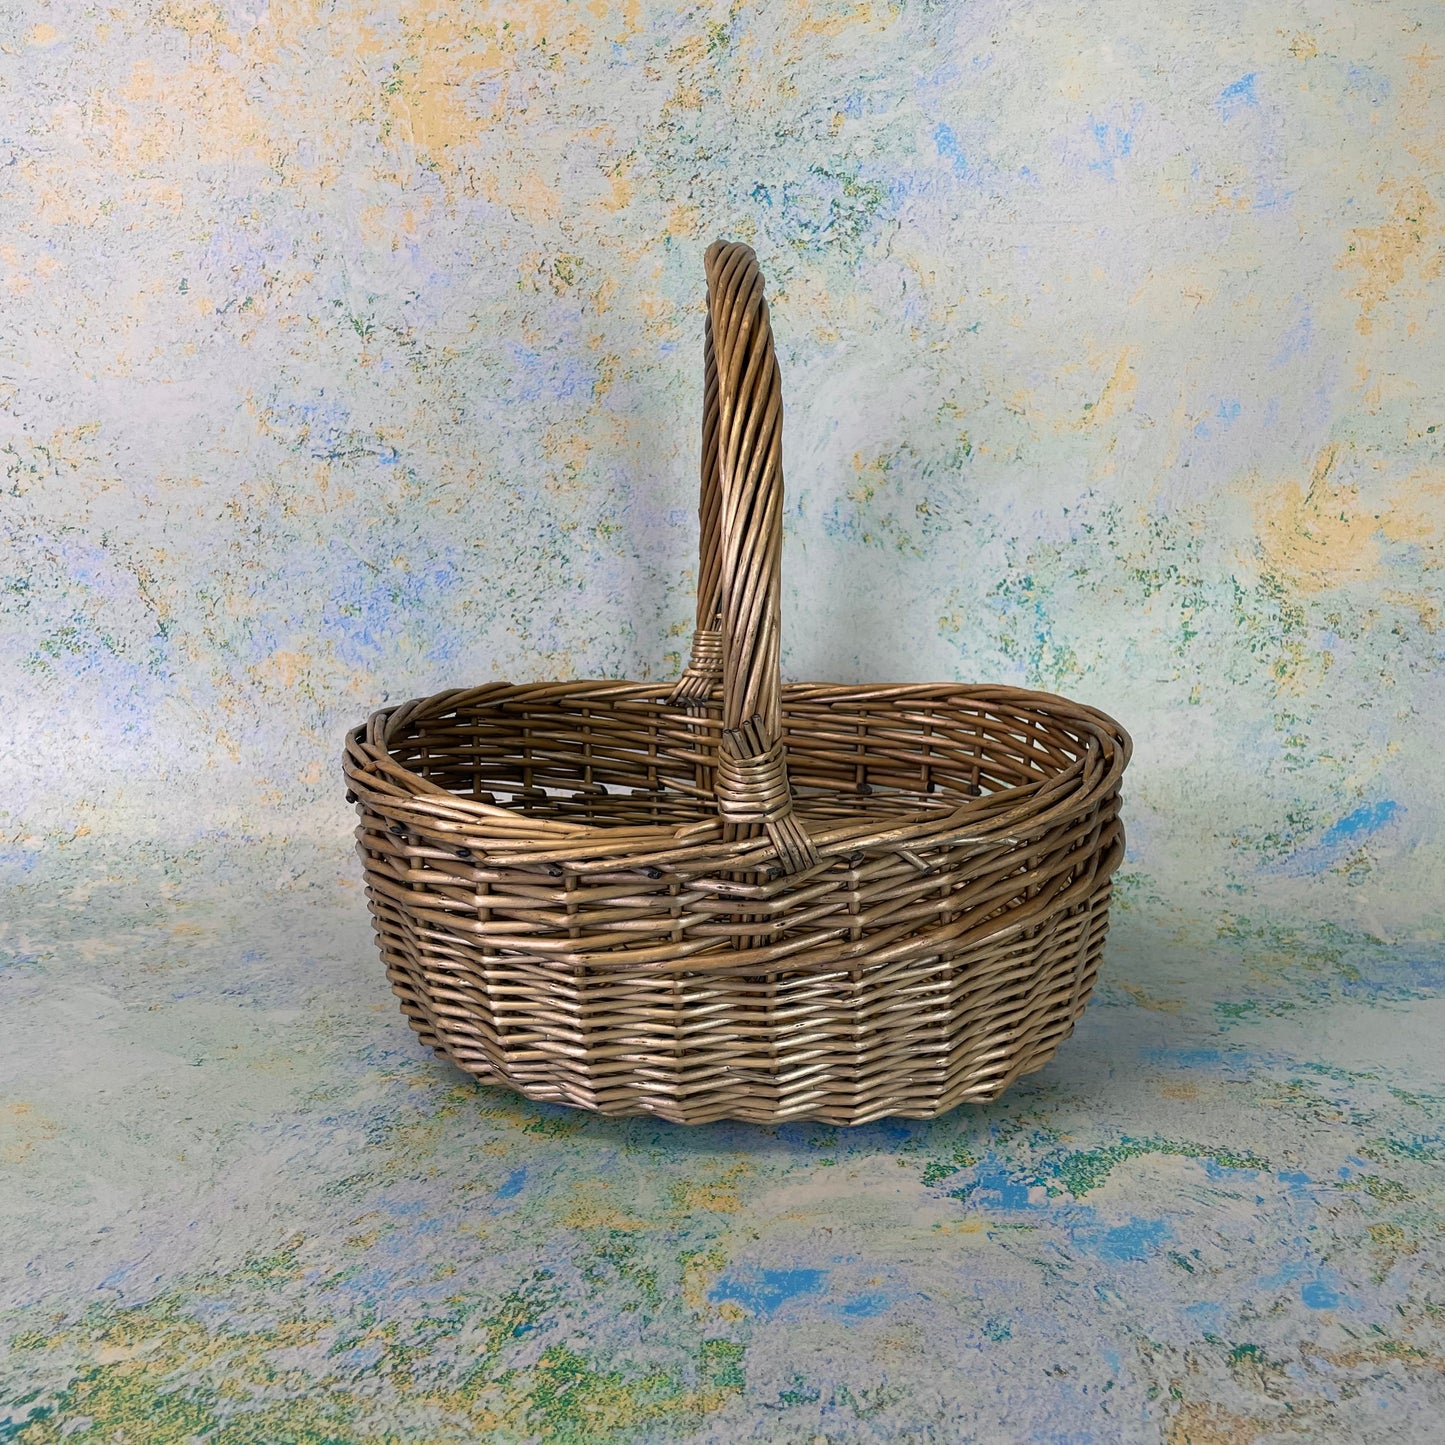 Wicker Foraging Basket - Antiqued Finish